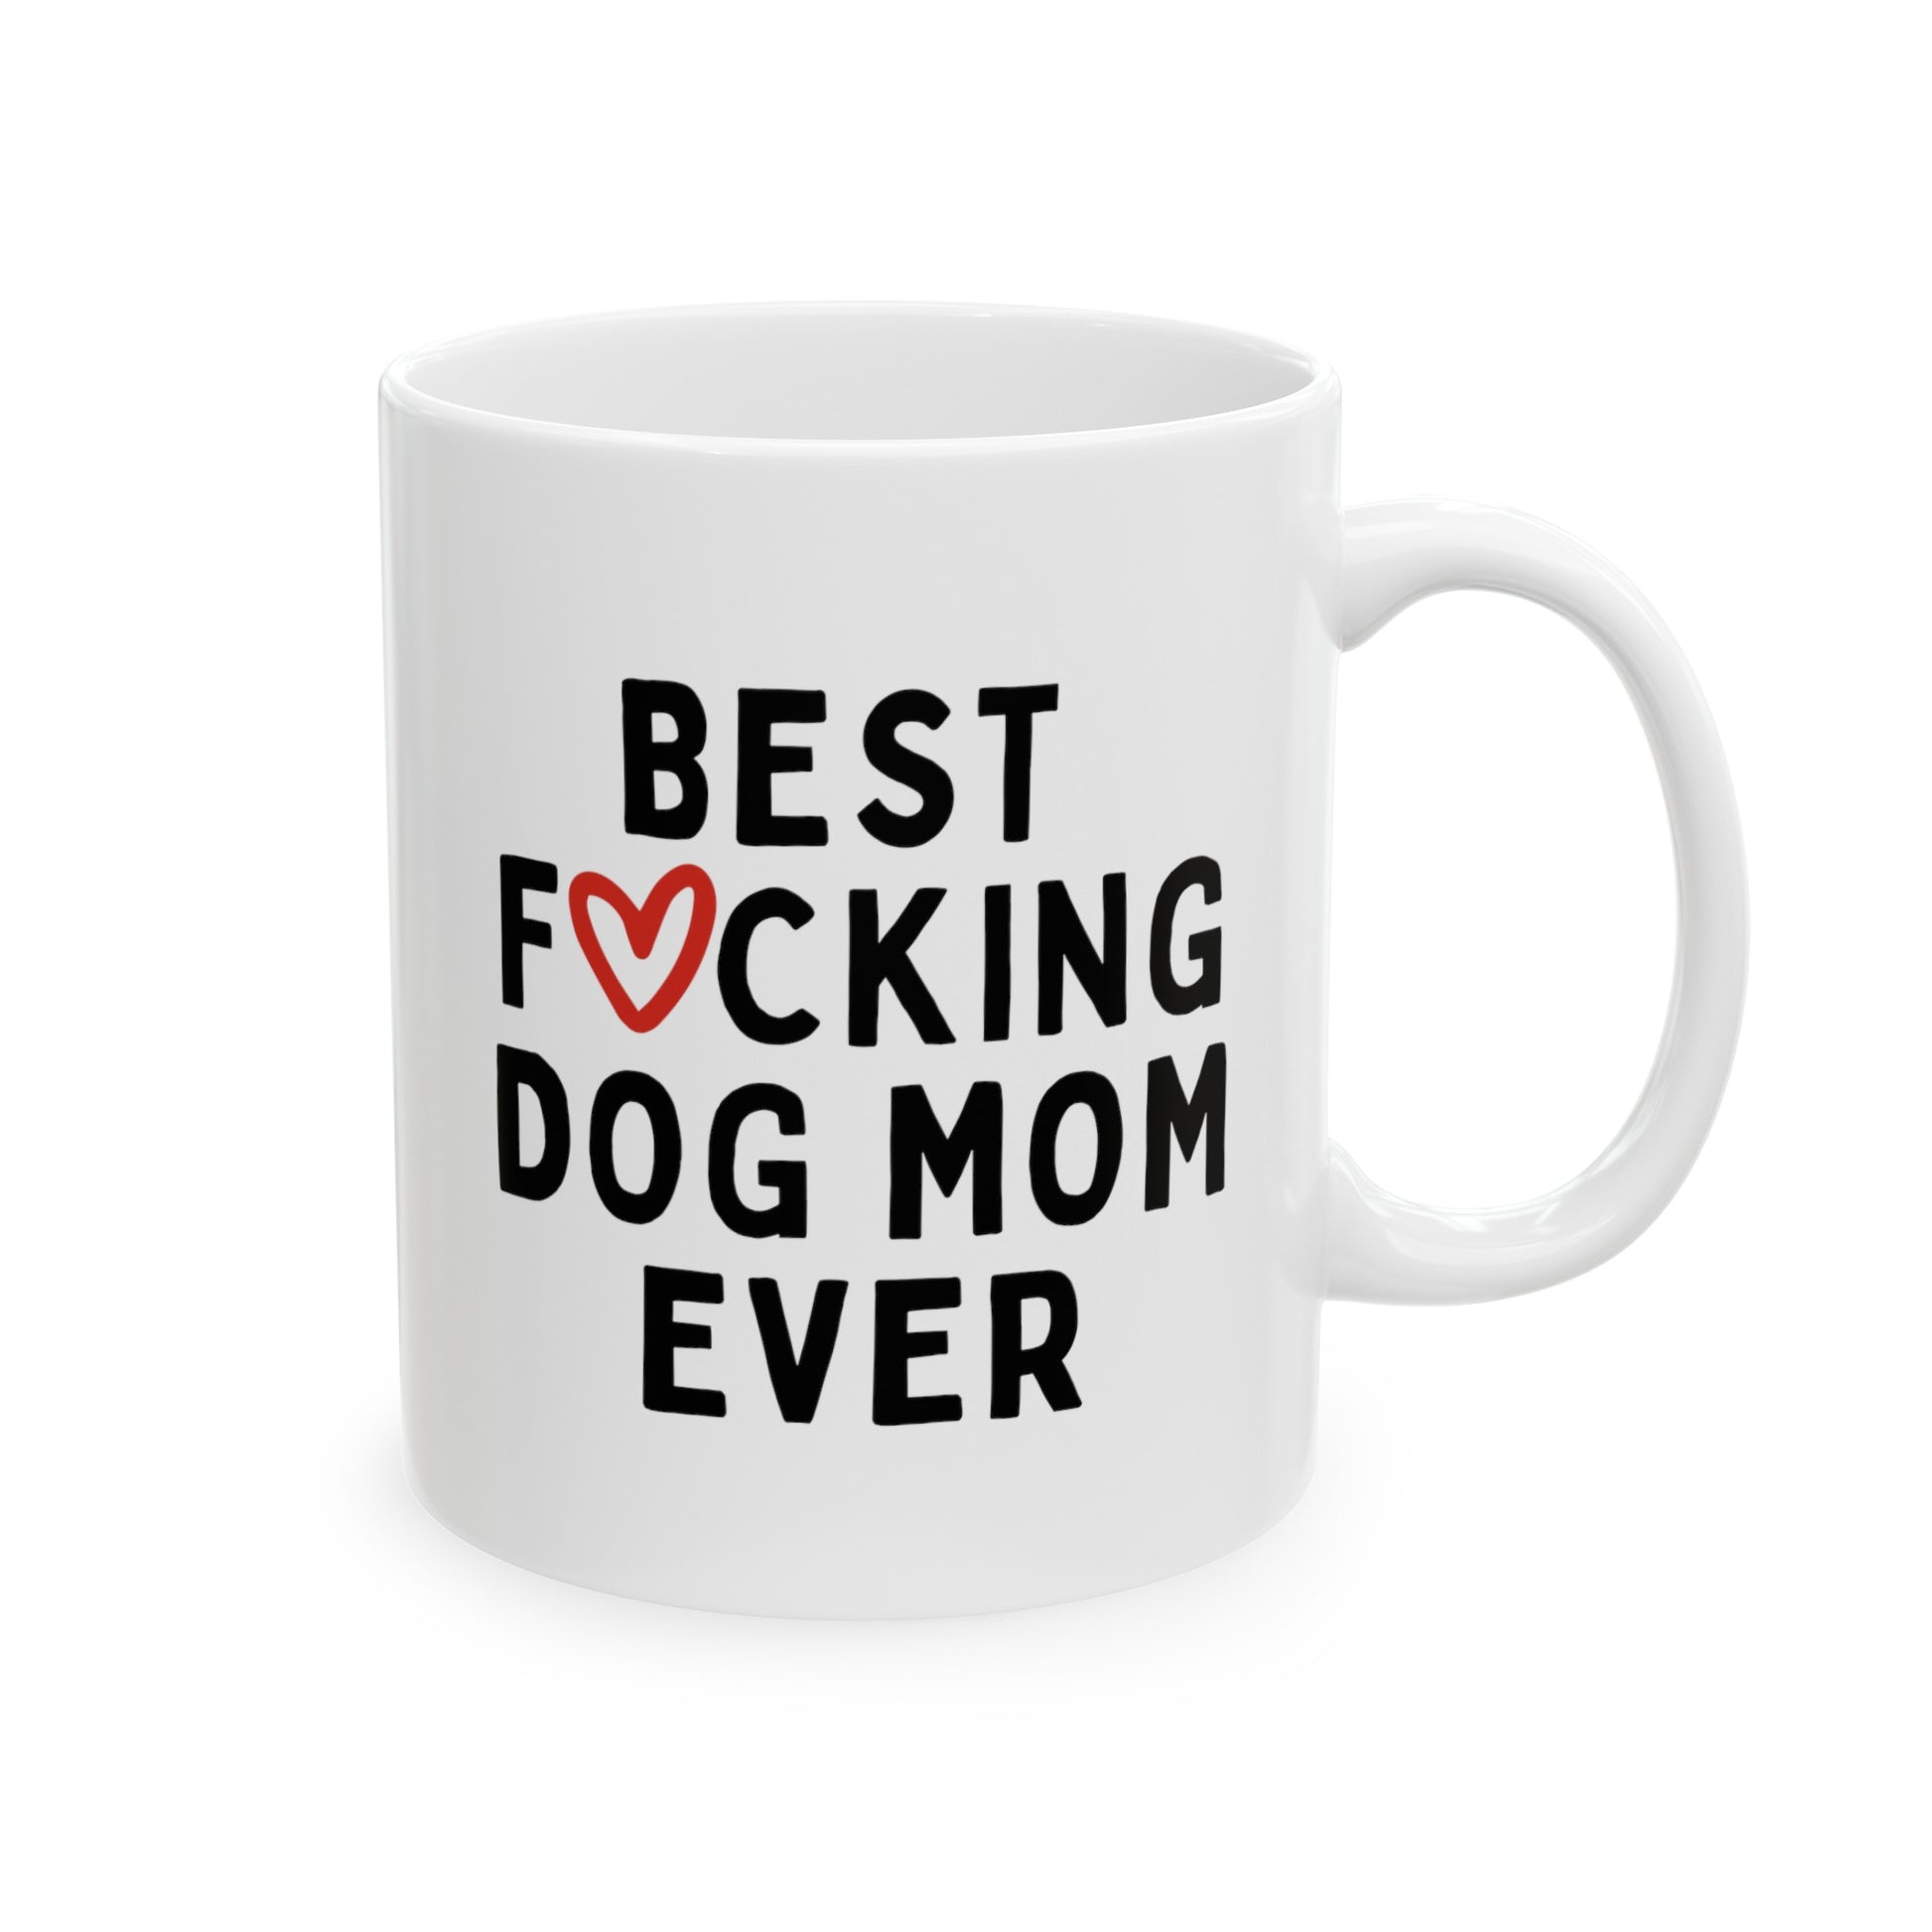 Best Fucking Dog Mom Ever 11oz white funny large coffee mug gift for furmom pet lover owner cuss word heart waveywares wavey wares wavywares wavy wares